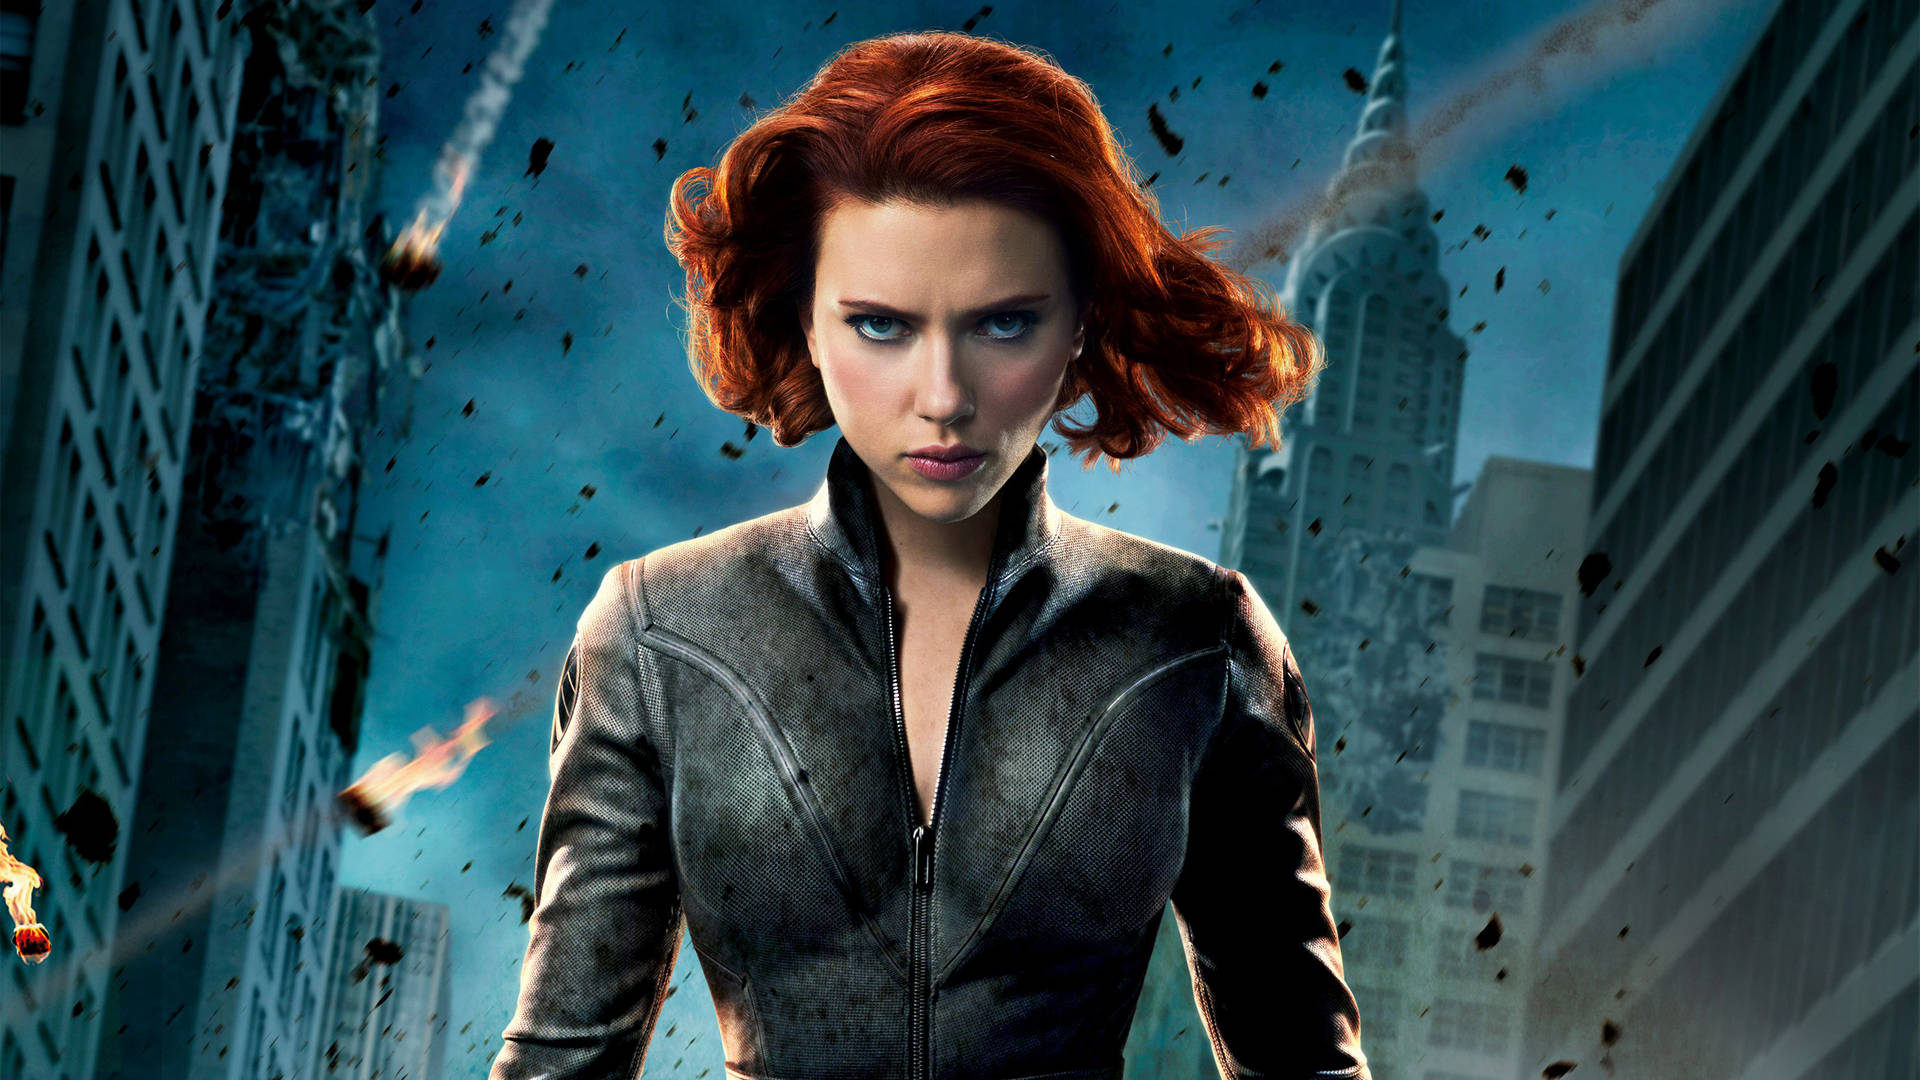 Scarlett Johansson as Black Widow, the powerful Marvel superhero Wallpaper